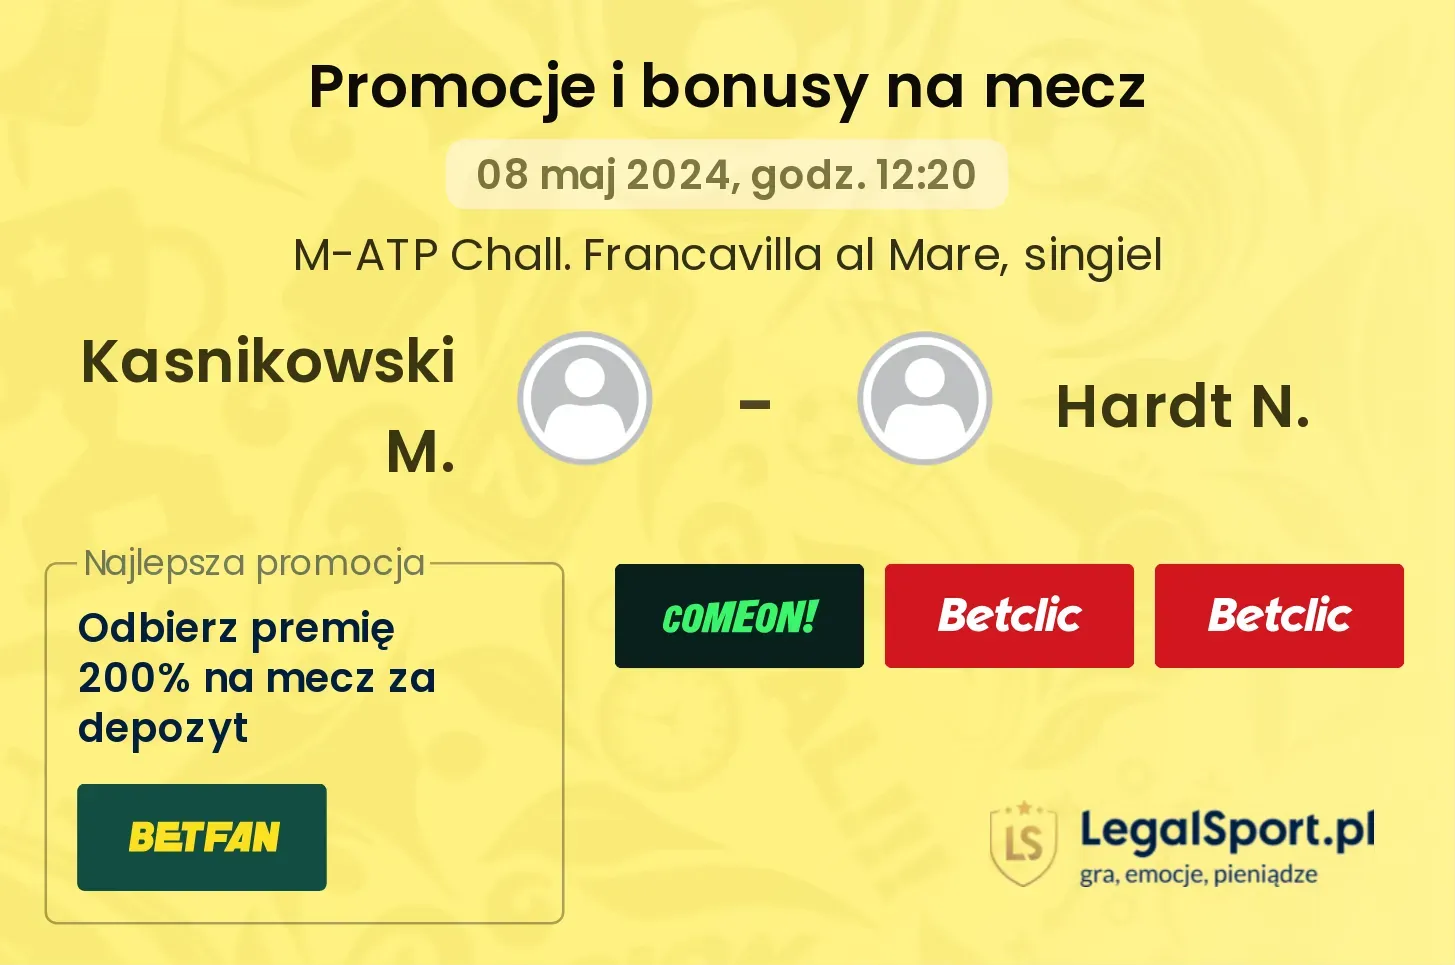 Kasnikowski M. - Hardt N. promocje bonusy na mecz